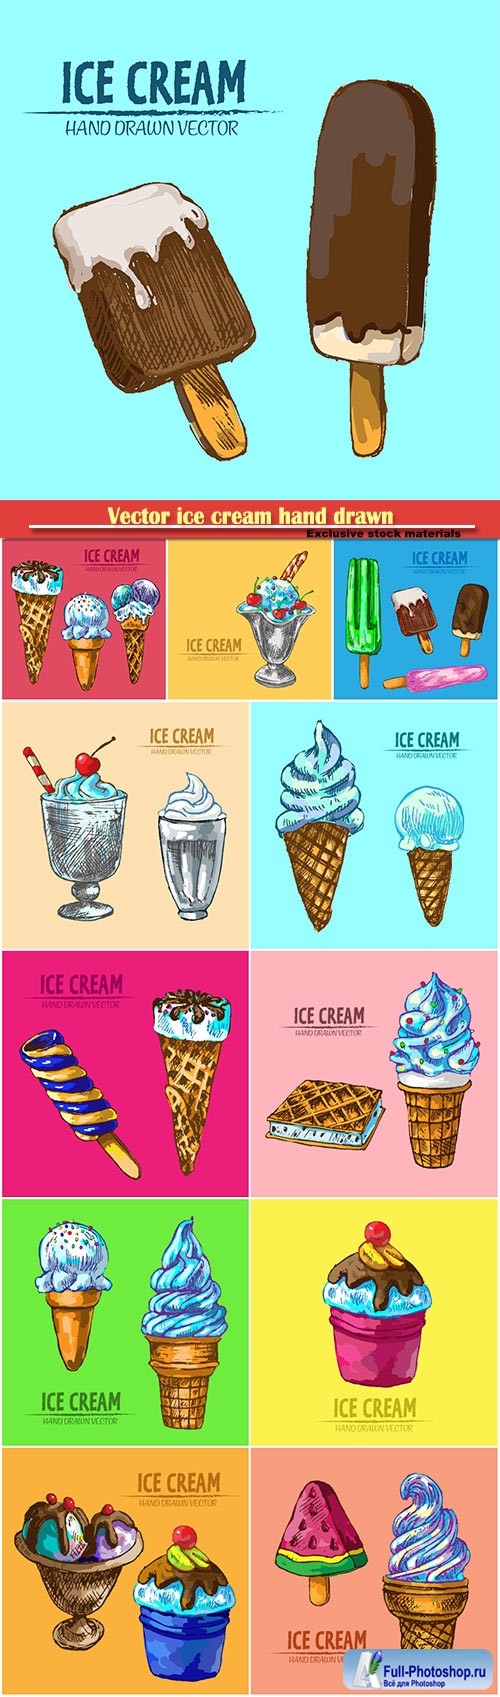 Vector ice cream hand drawn retro illustration collection set